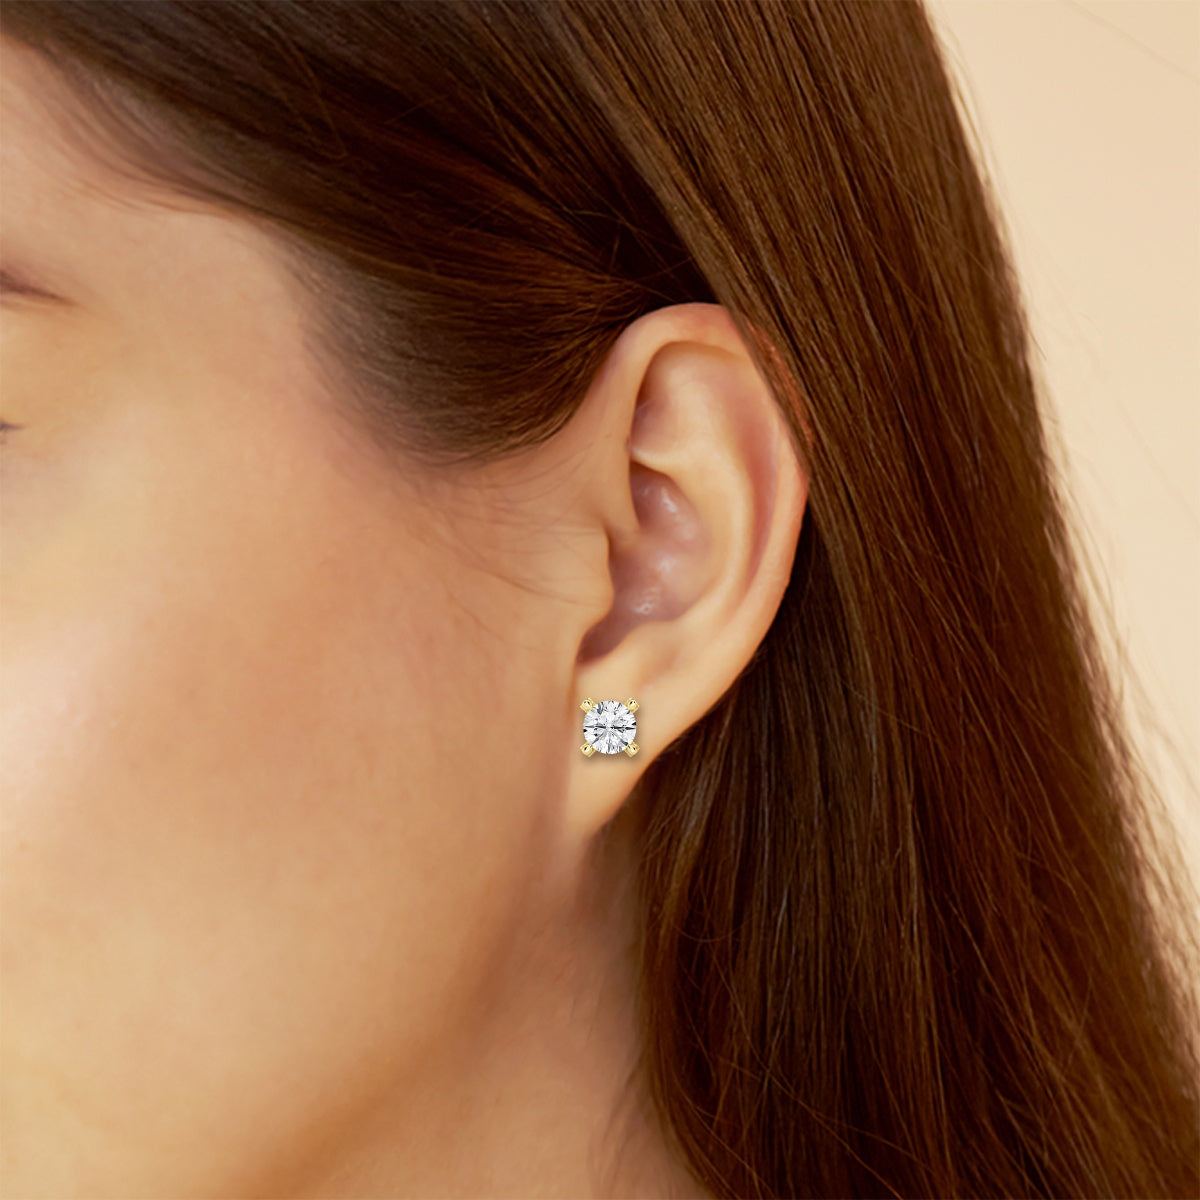 A 4-carat lab-grown diamond stud earring set in yellow gold on a woman's ear